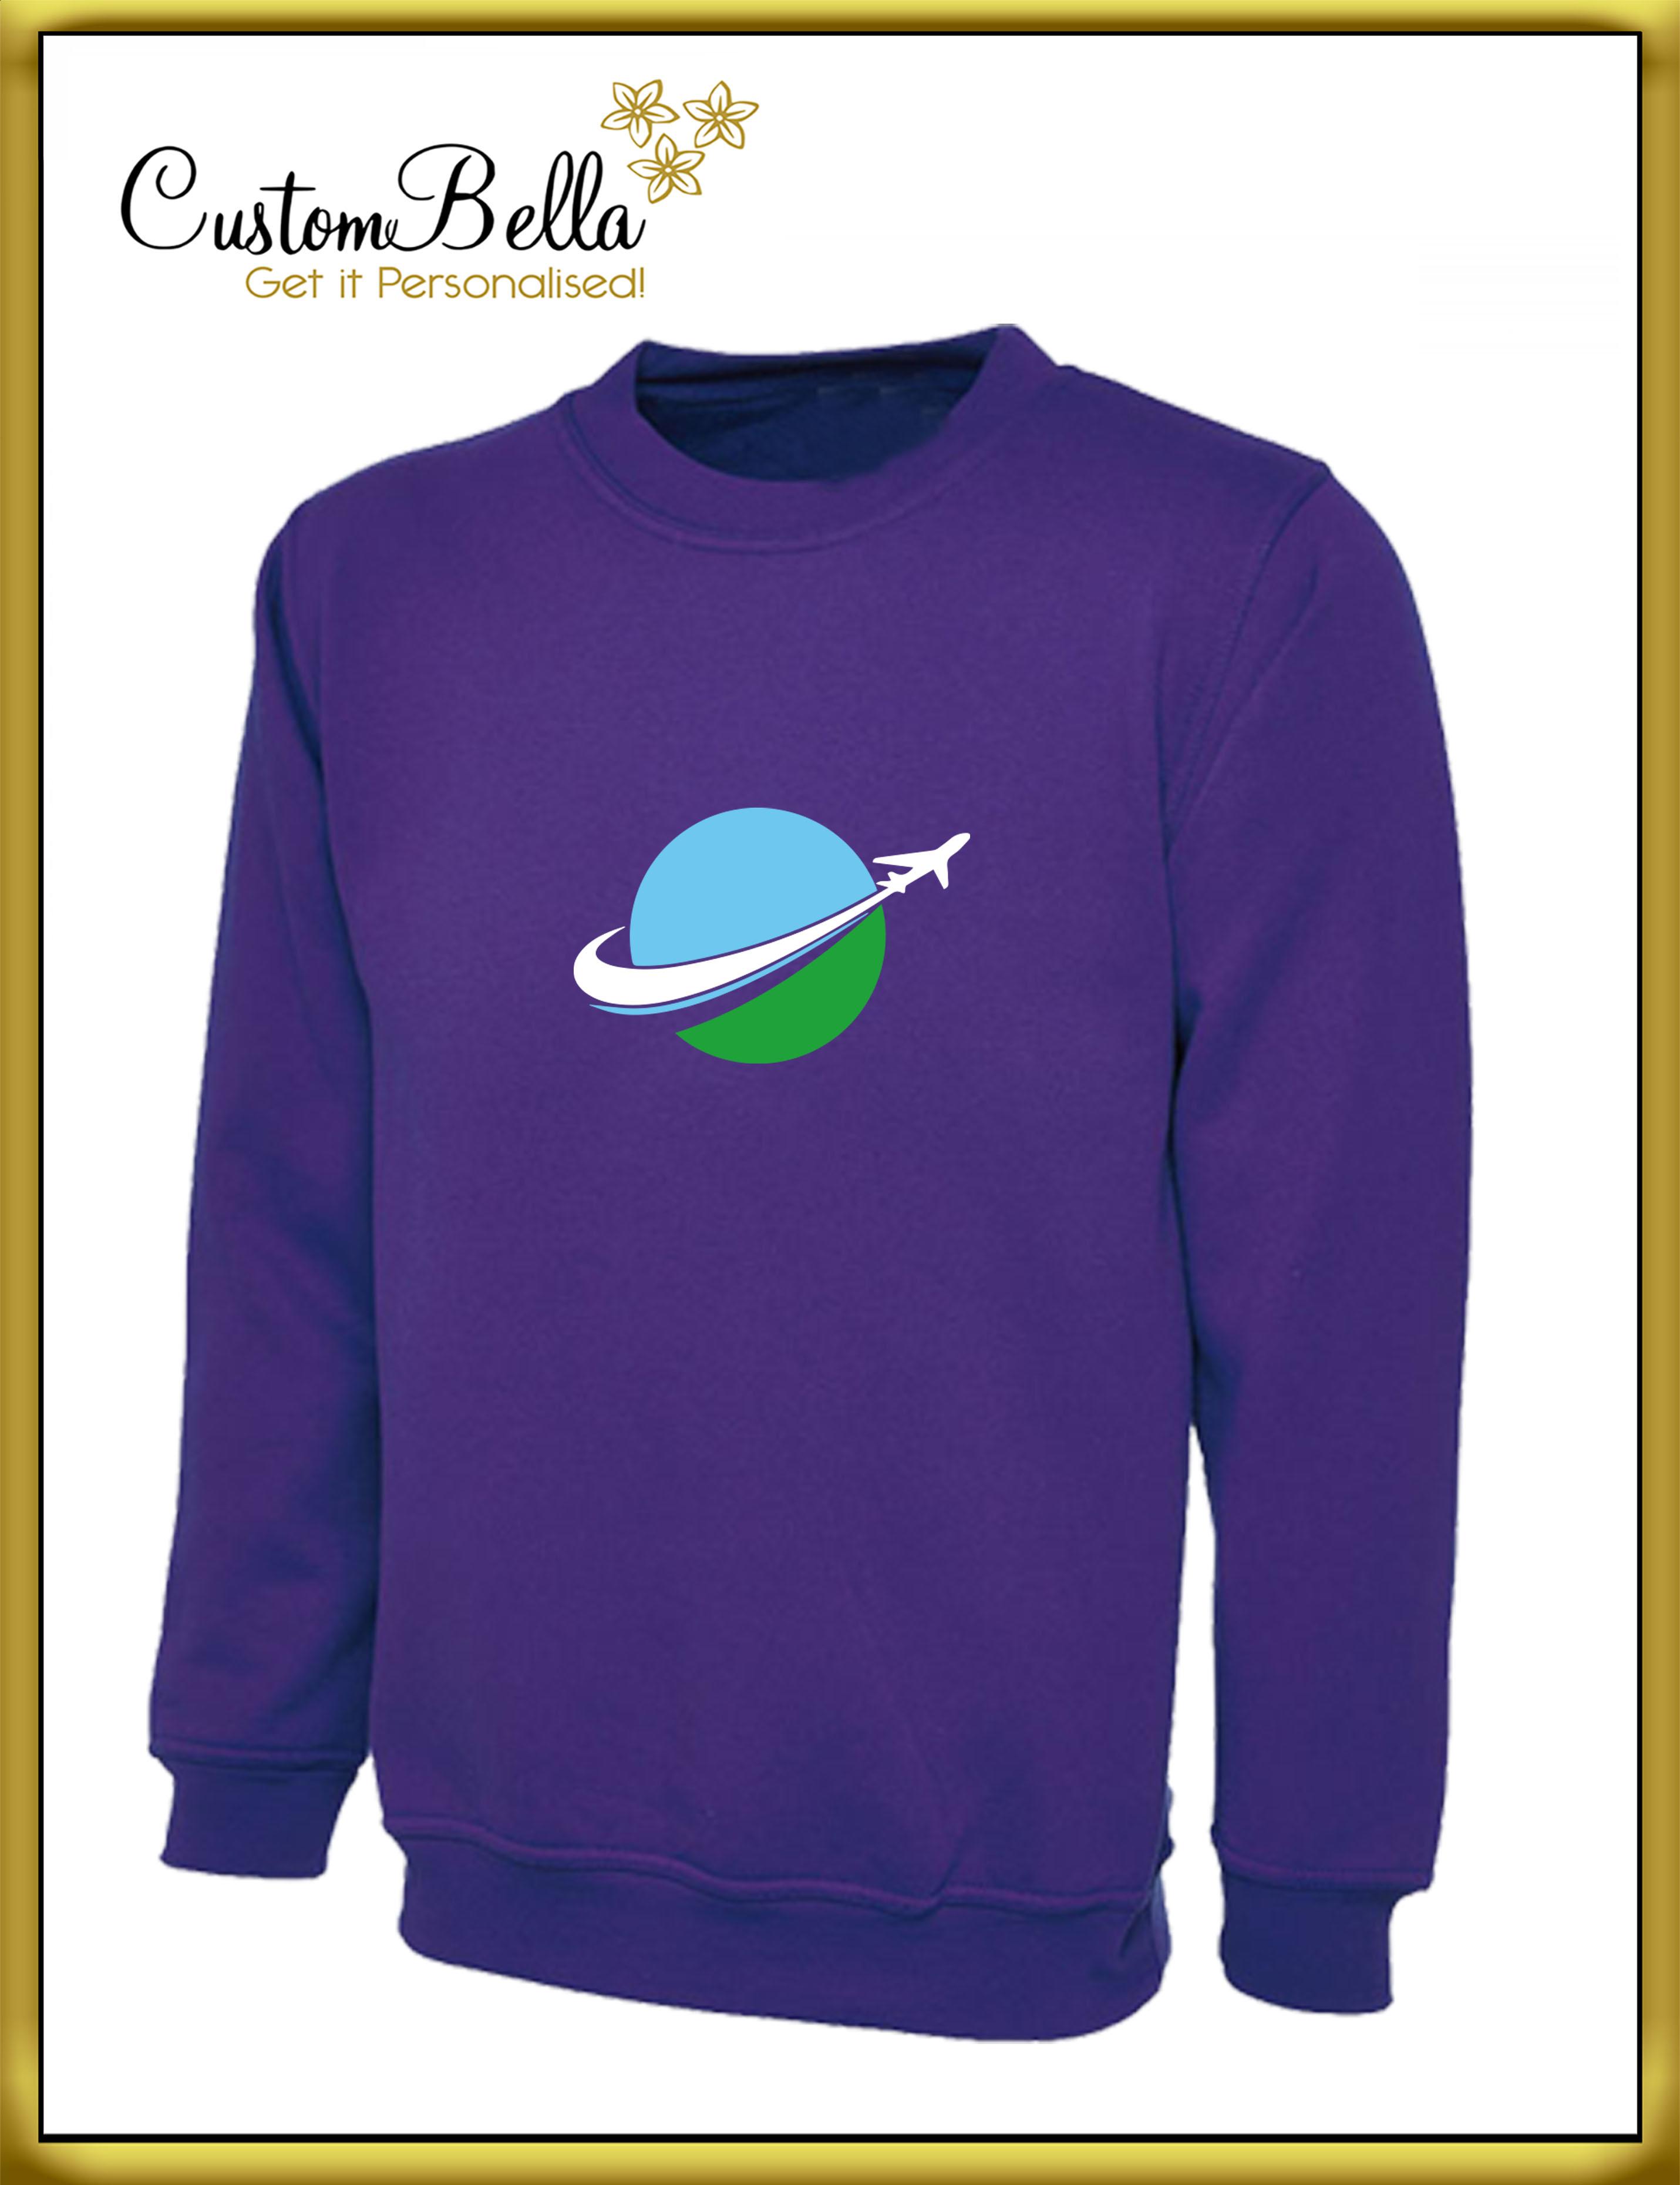 Personalised jumper printed UK purple